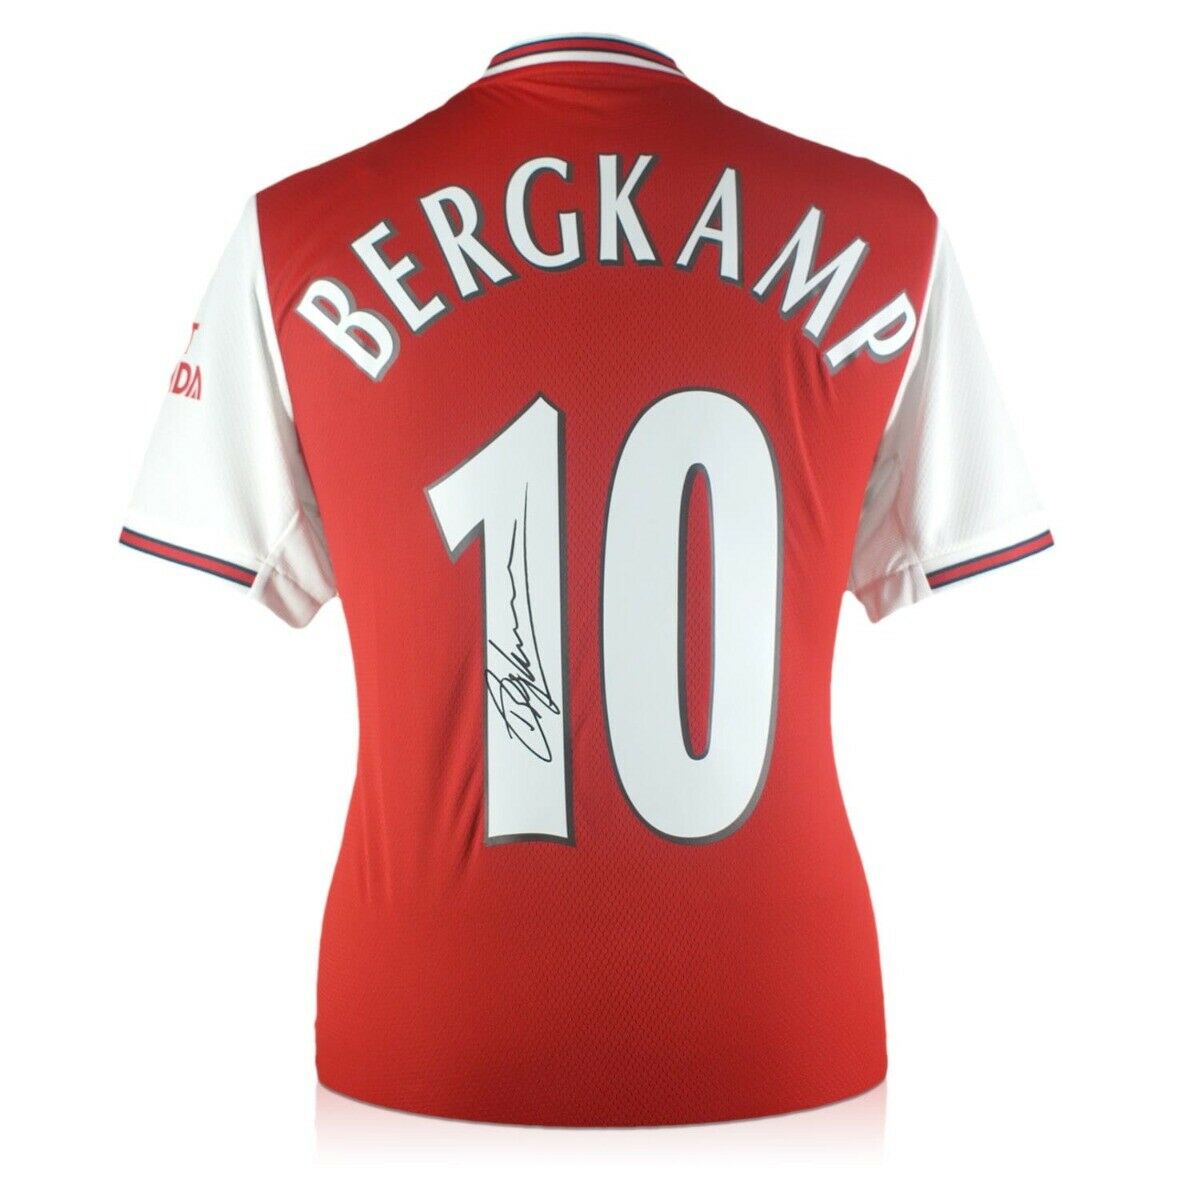 Dennis Bergkamp Signed Arsenal Jersey